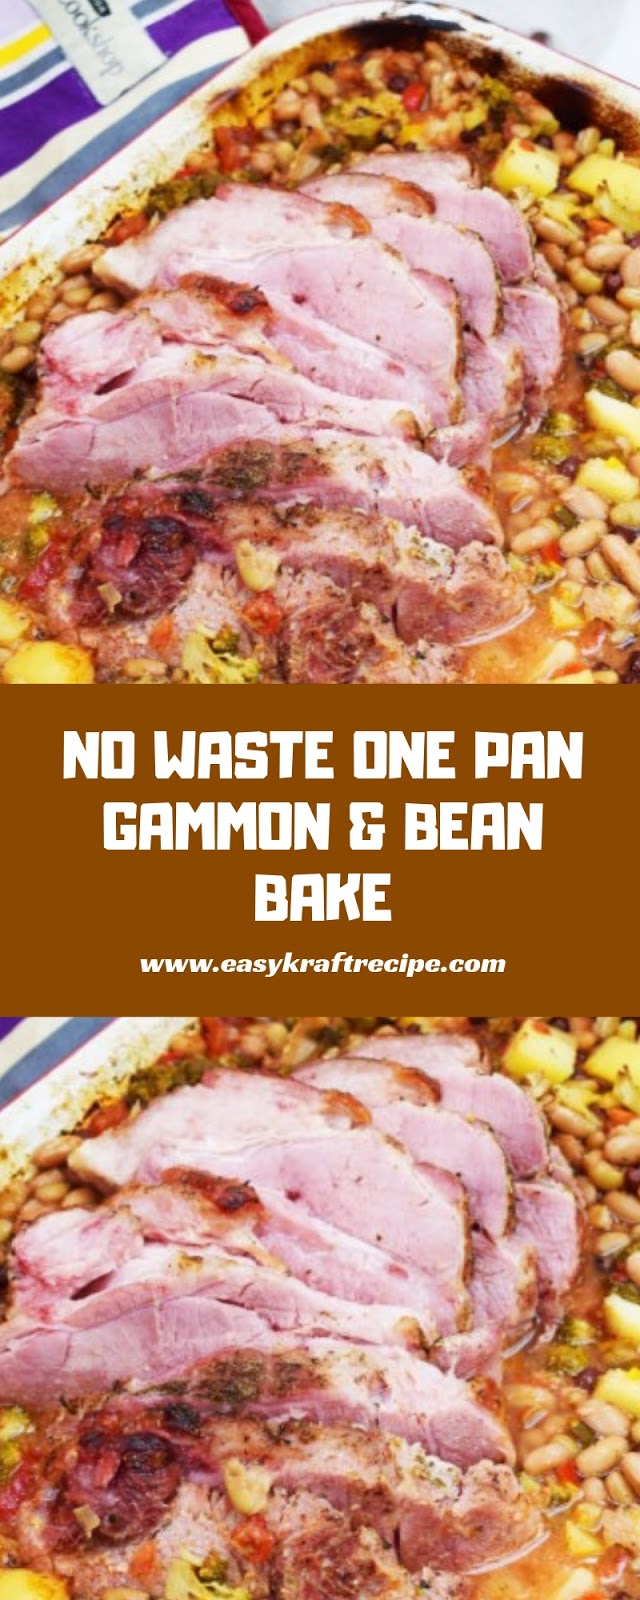 NO WASTE ONE PAN GAMMON AND BEAN BAKE